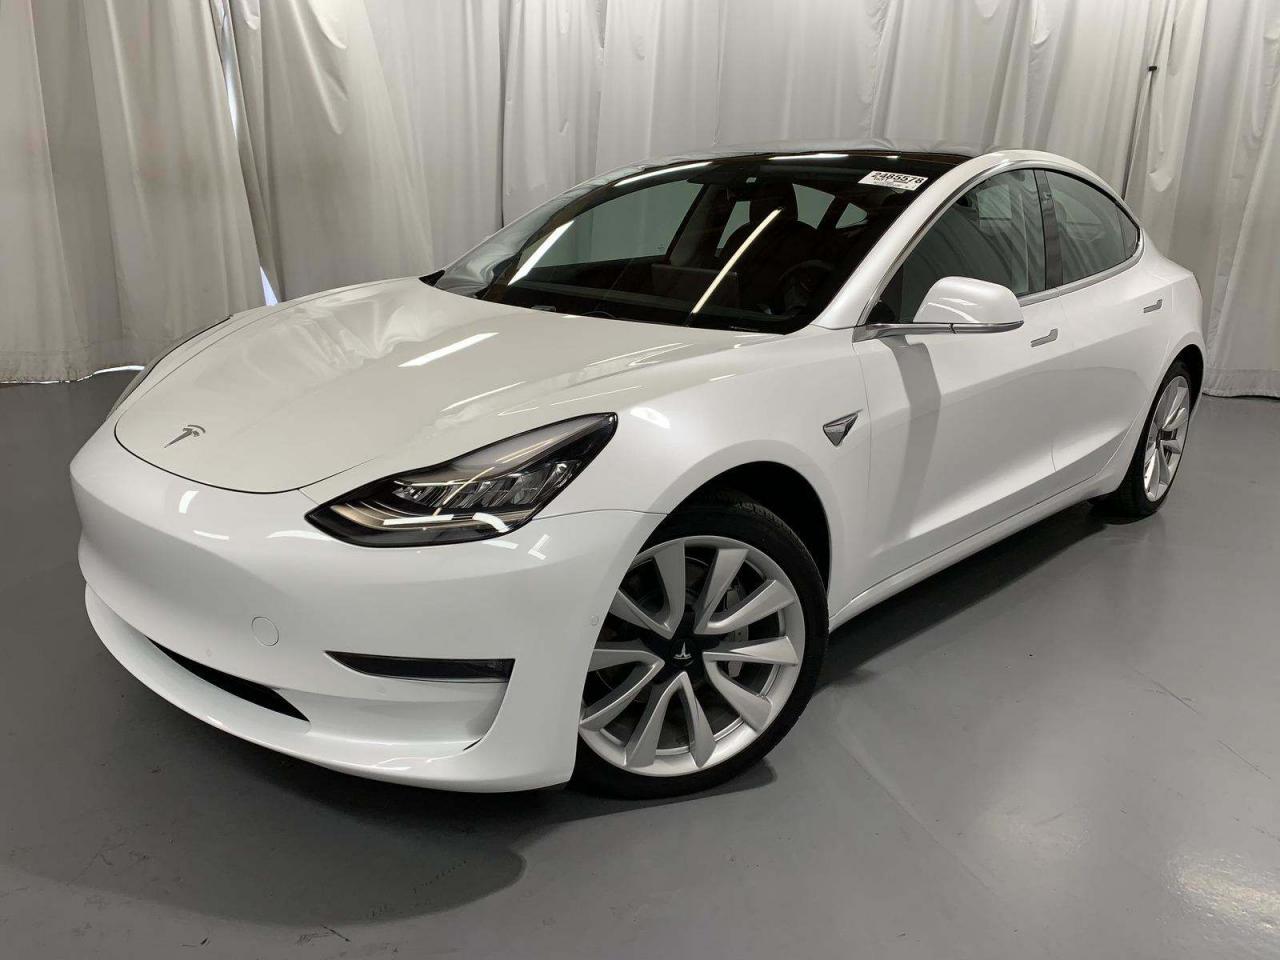 Used Tesla Model 3s for Sale Buy Online + Home Delivery Vroom